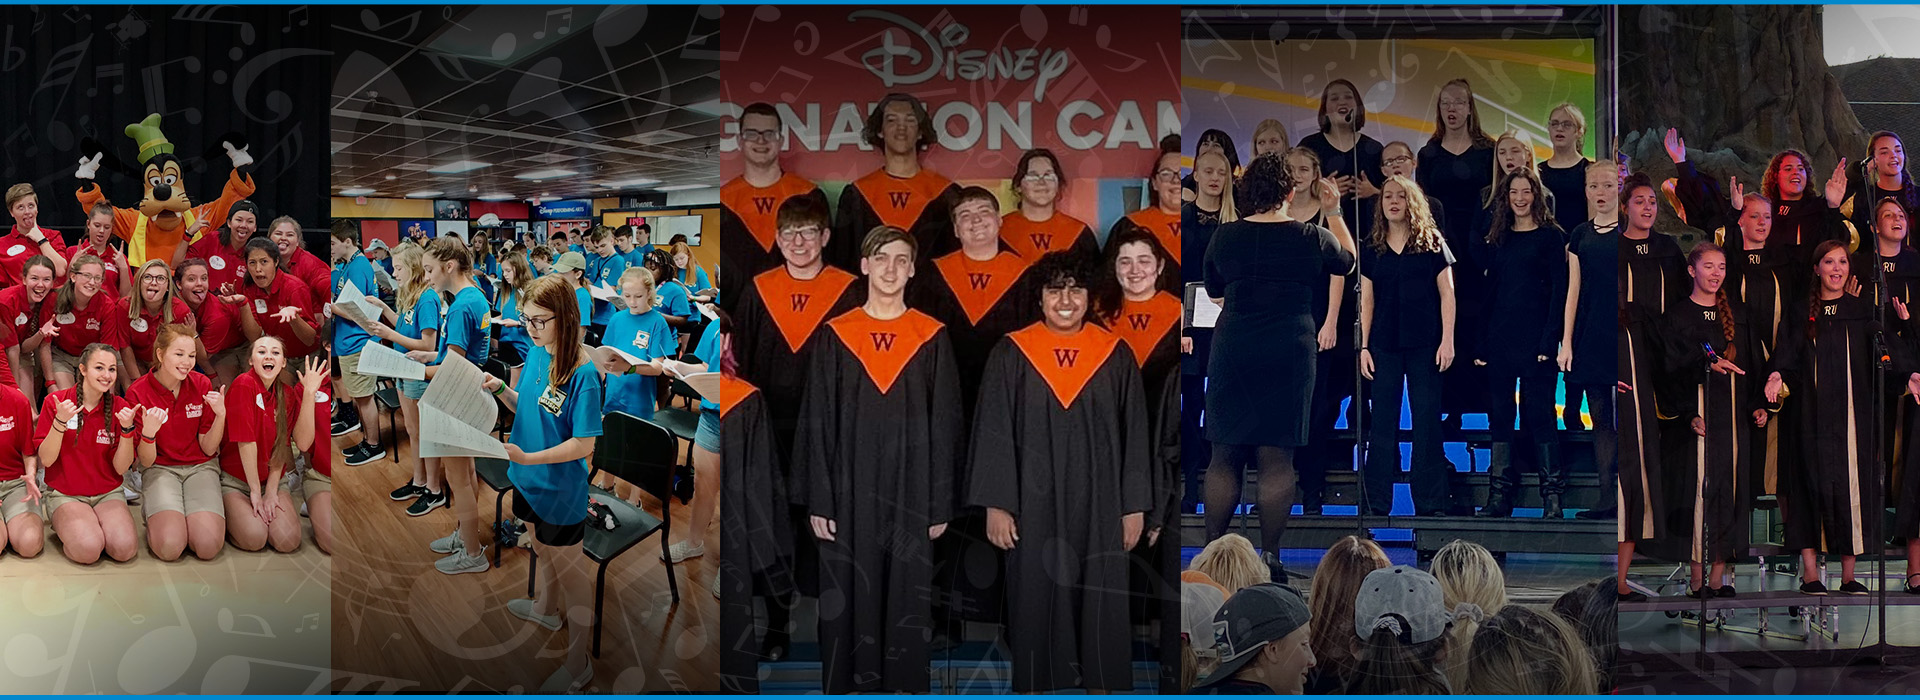 Disney Imagination Campus orchestra trips